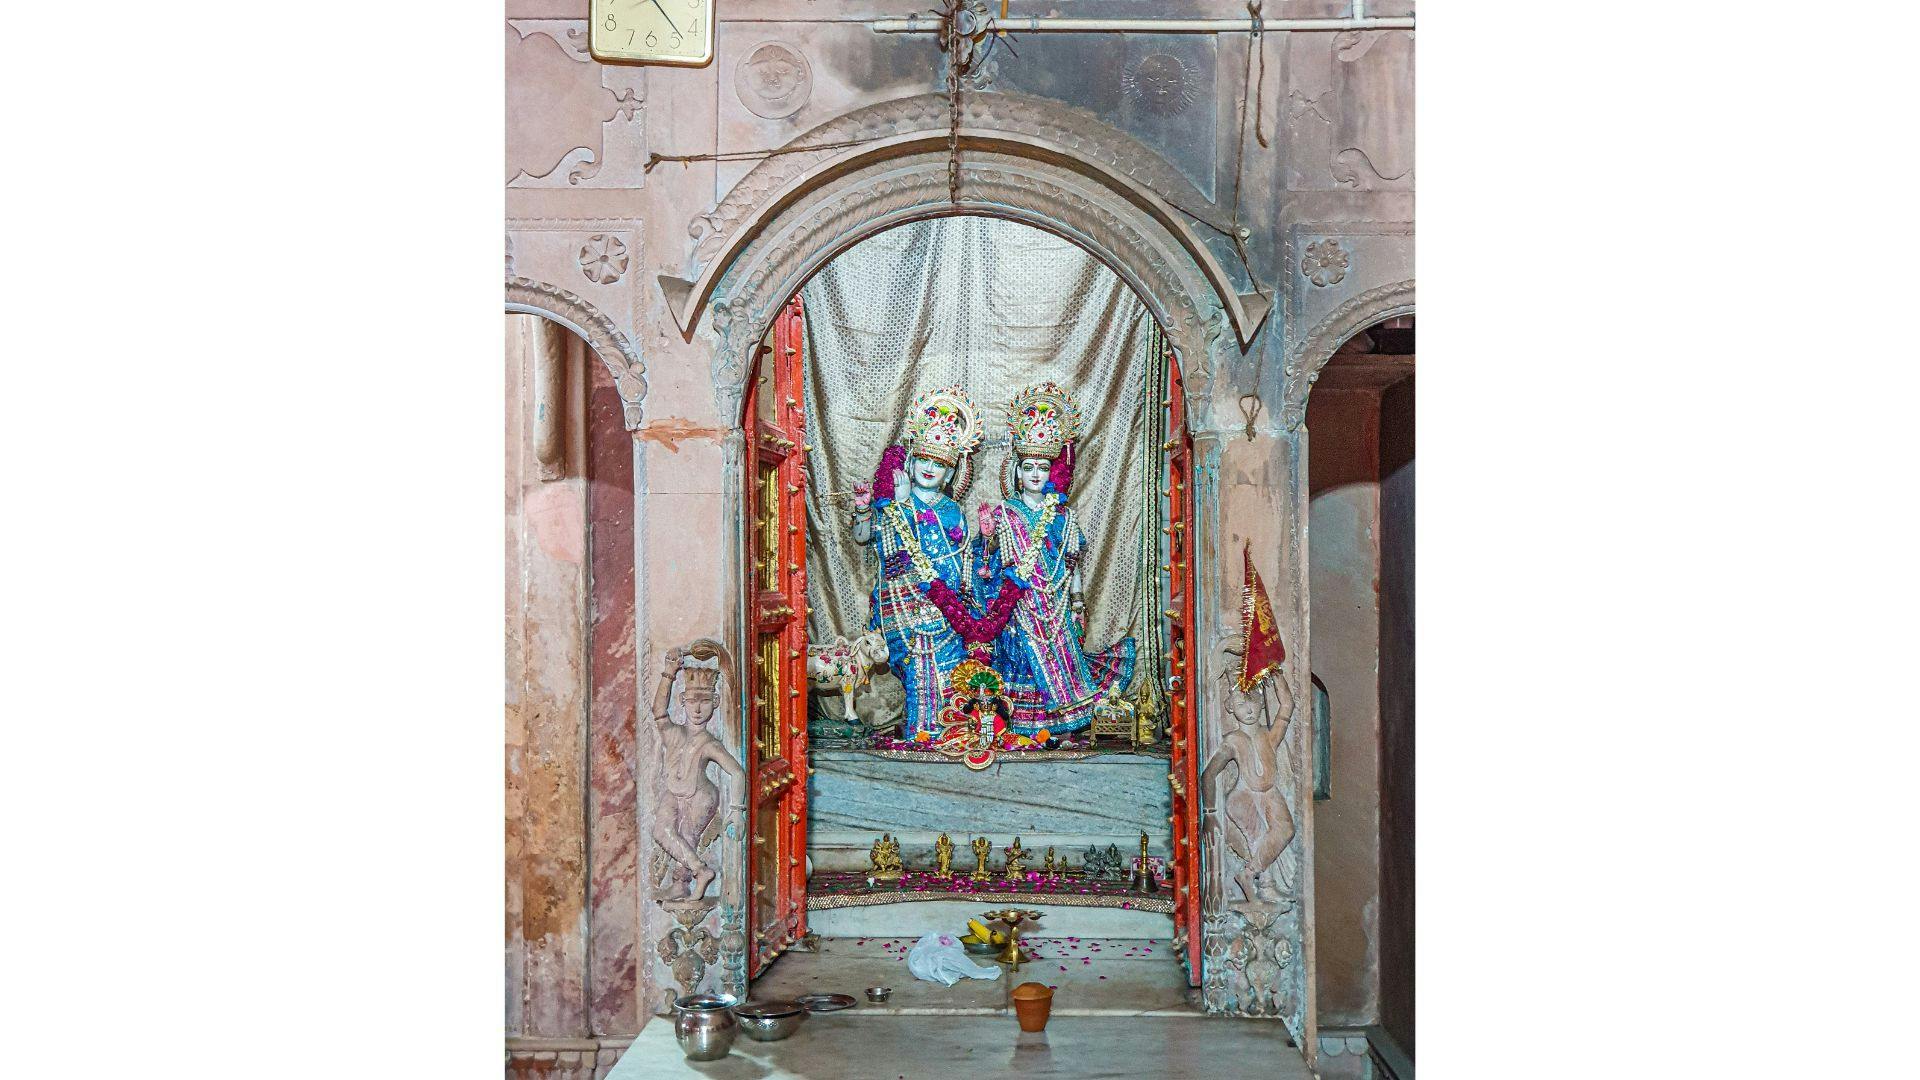 Idols of Radha and Krishna inside the temple